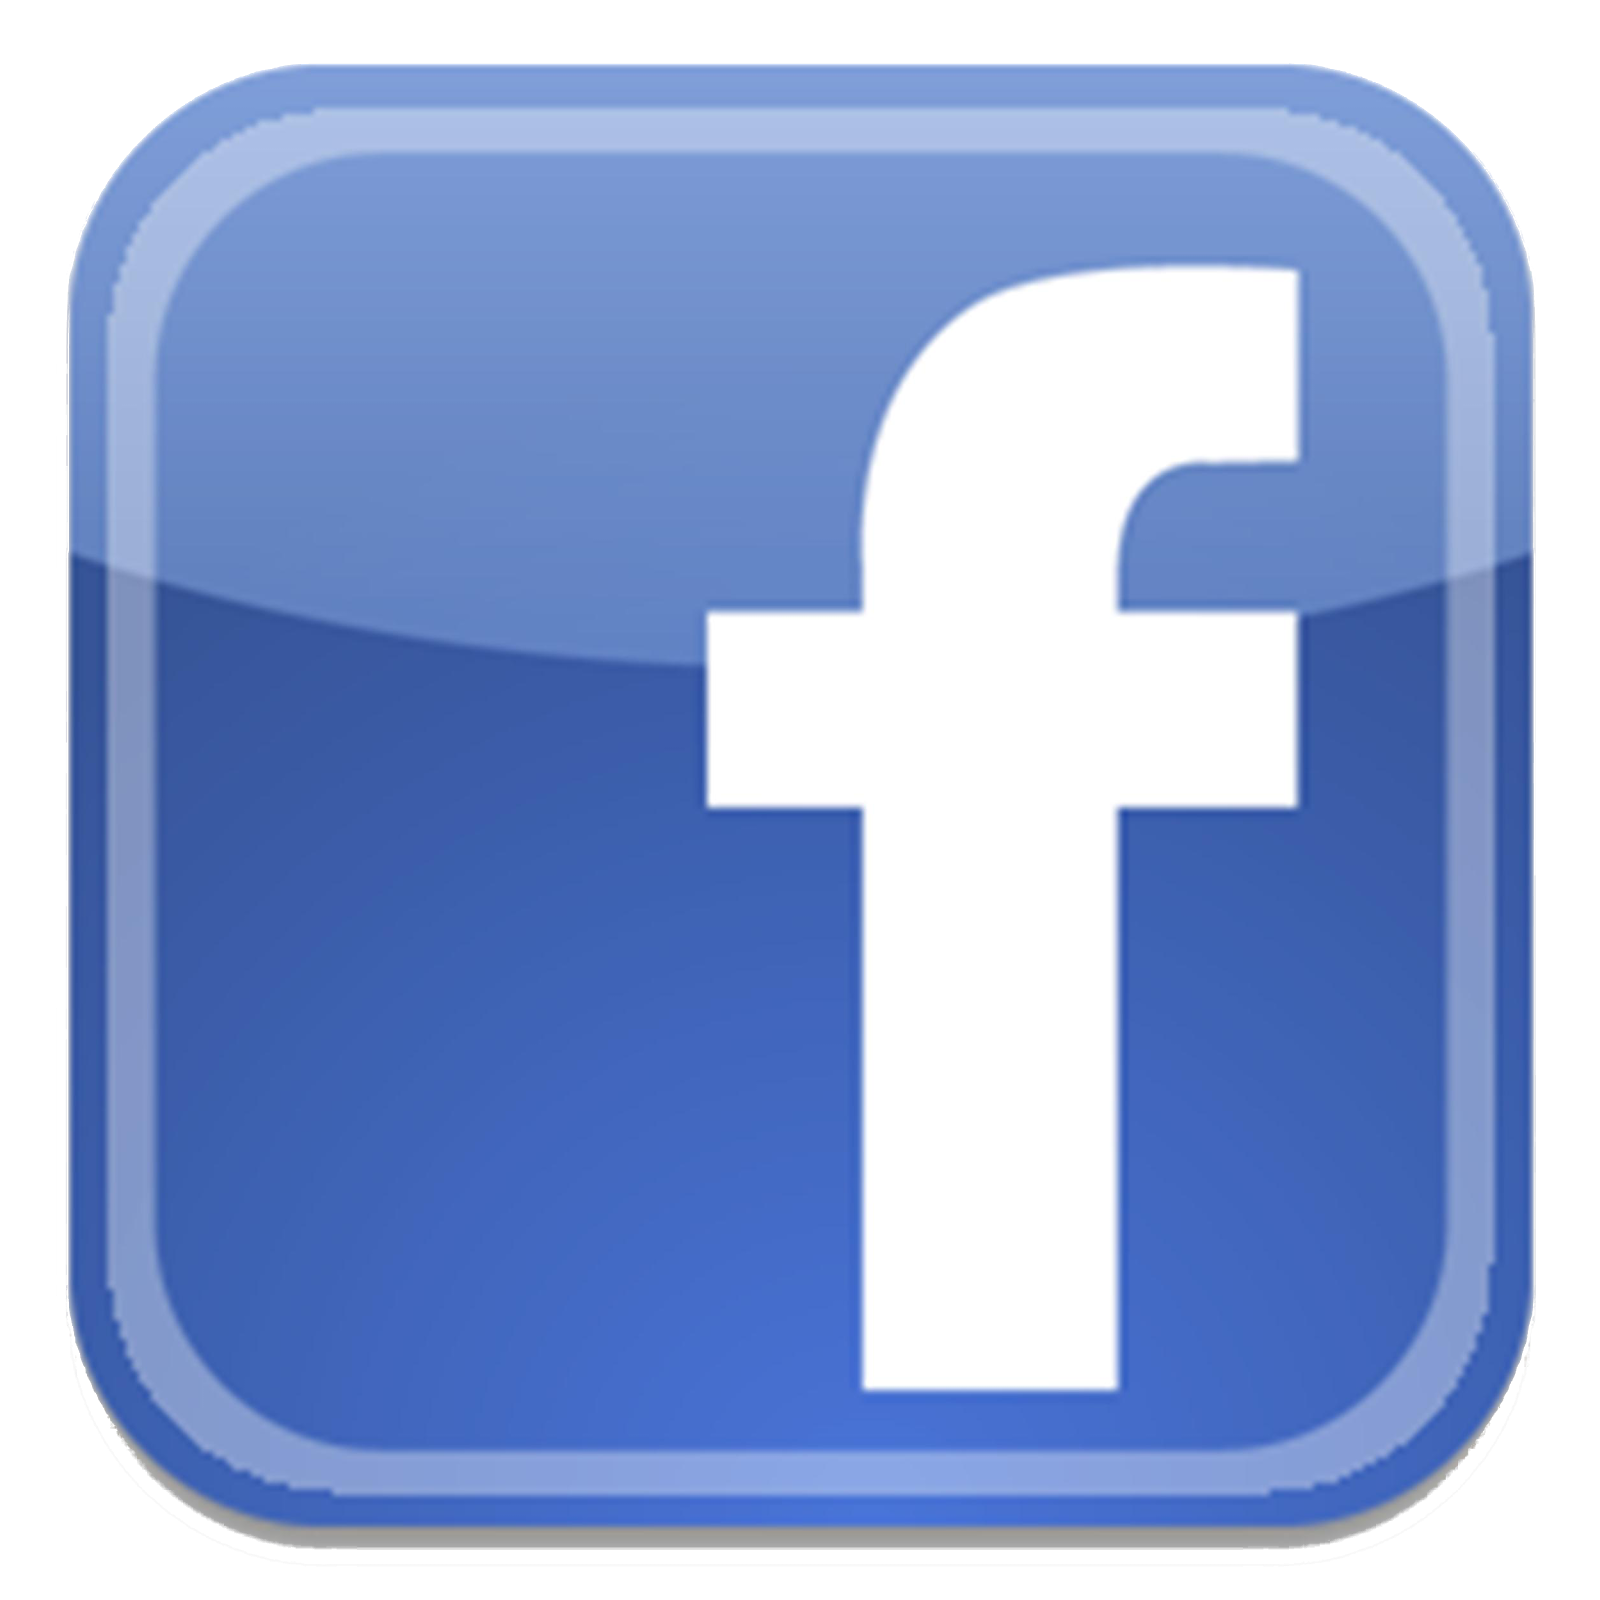 Facebook Logo Picture Png Transparent Background Free Download 11